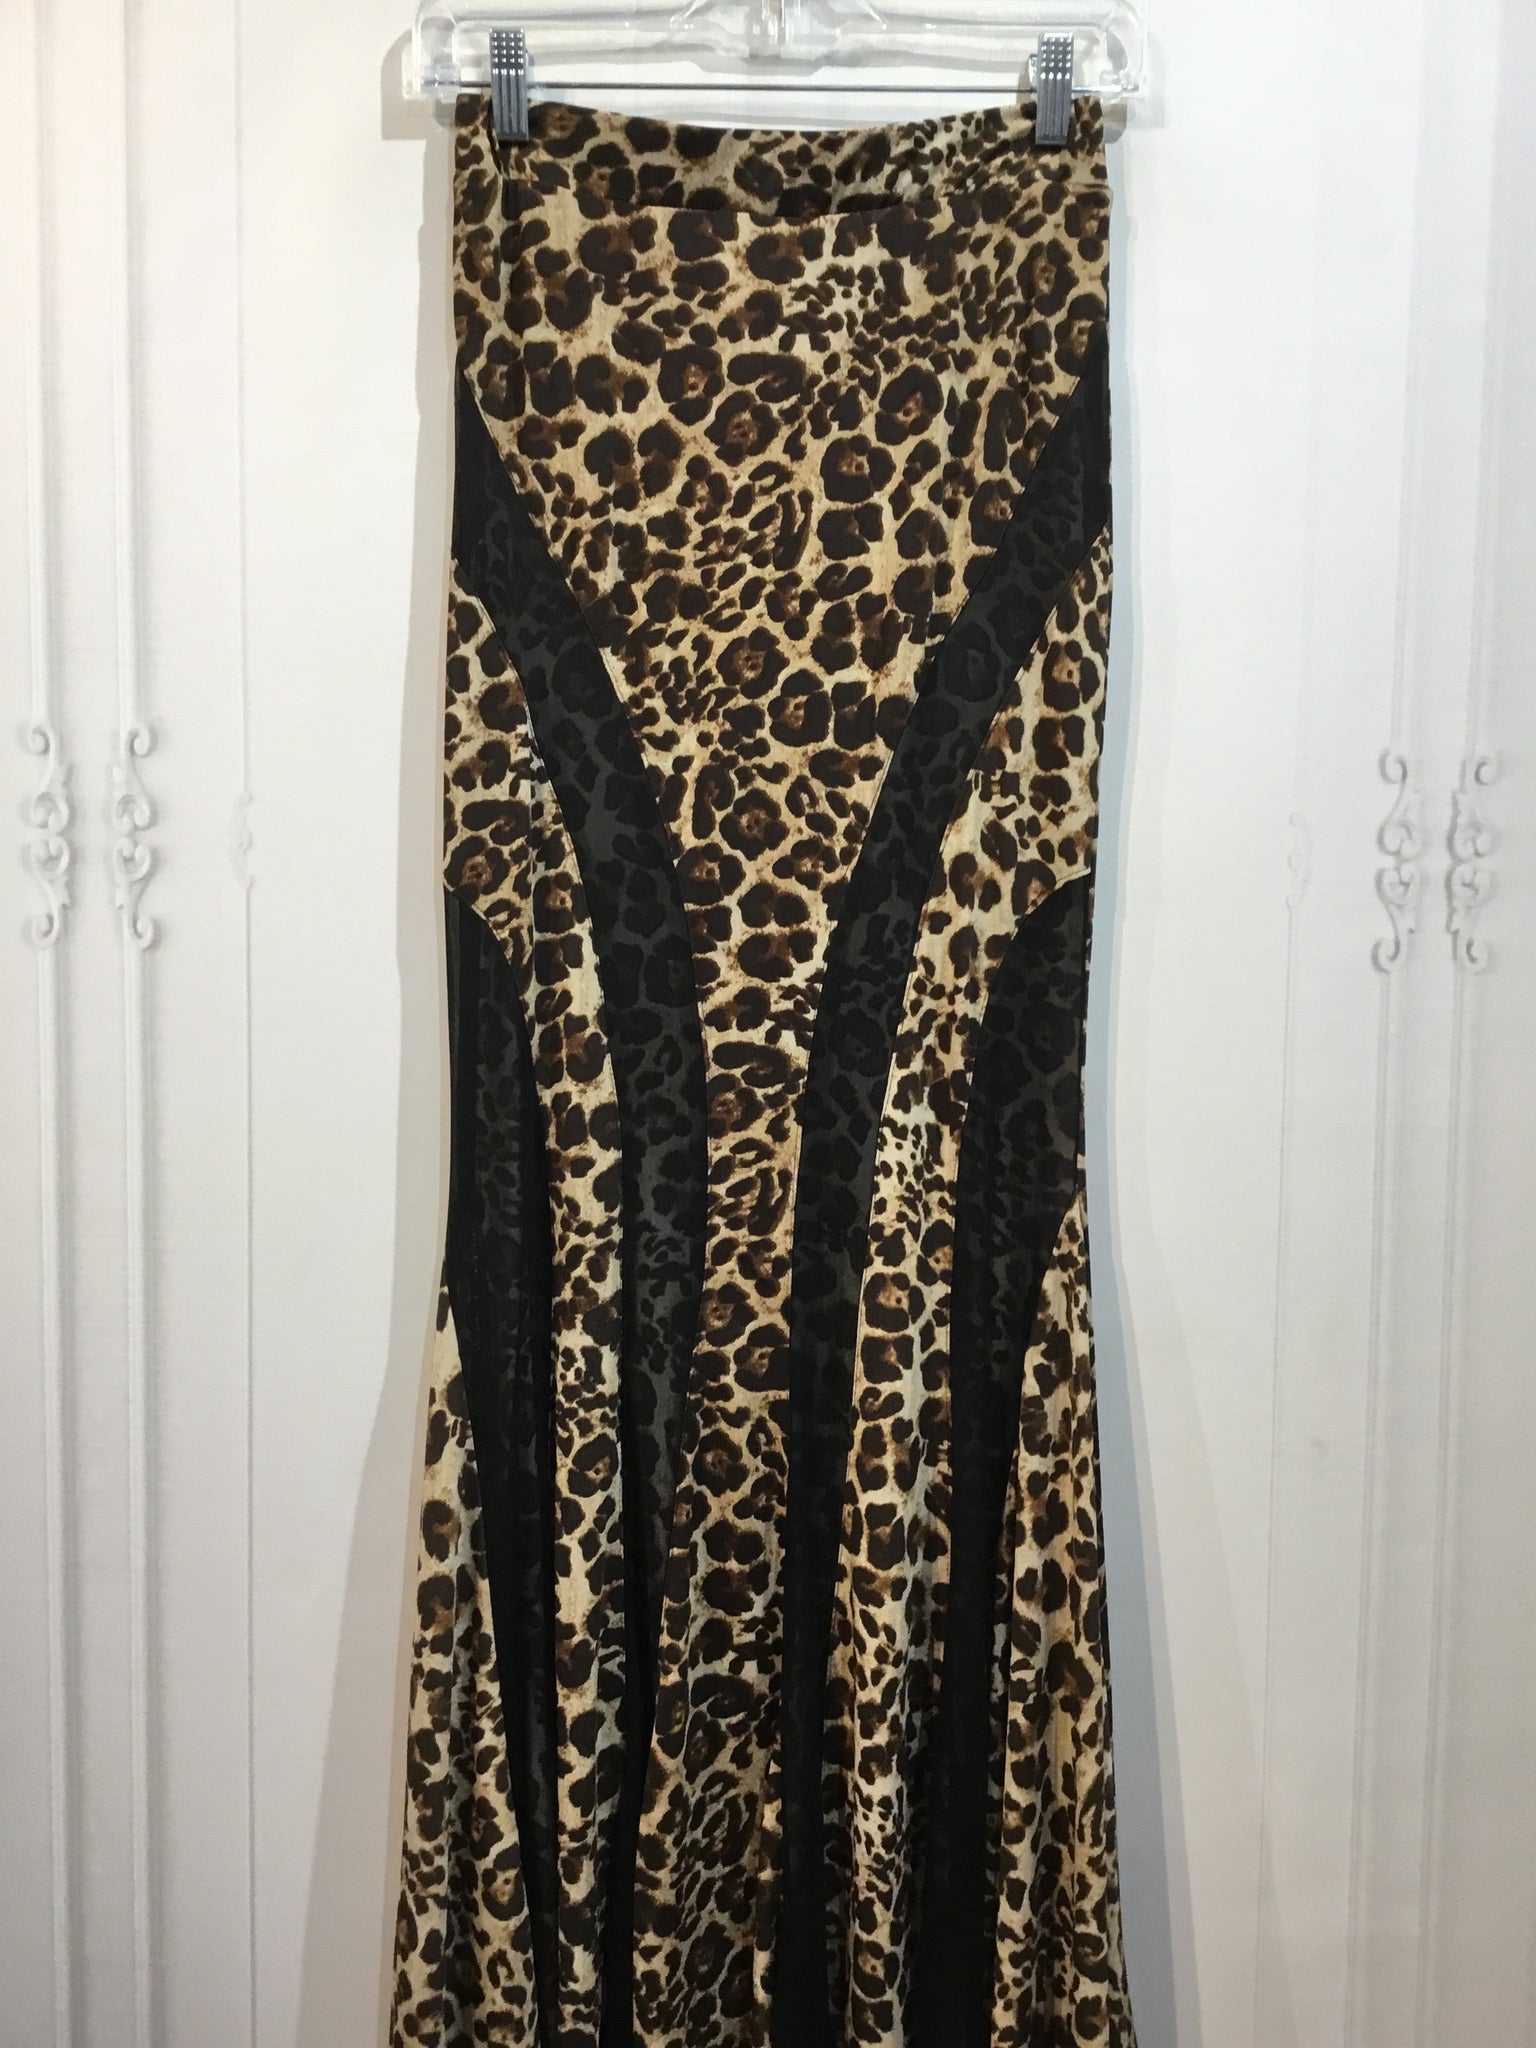 Valia Size S/4-6 Leopard Skirts